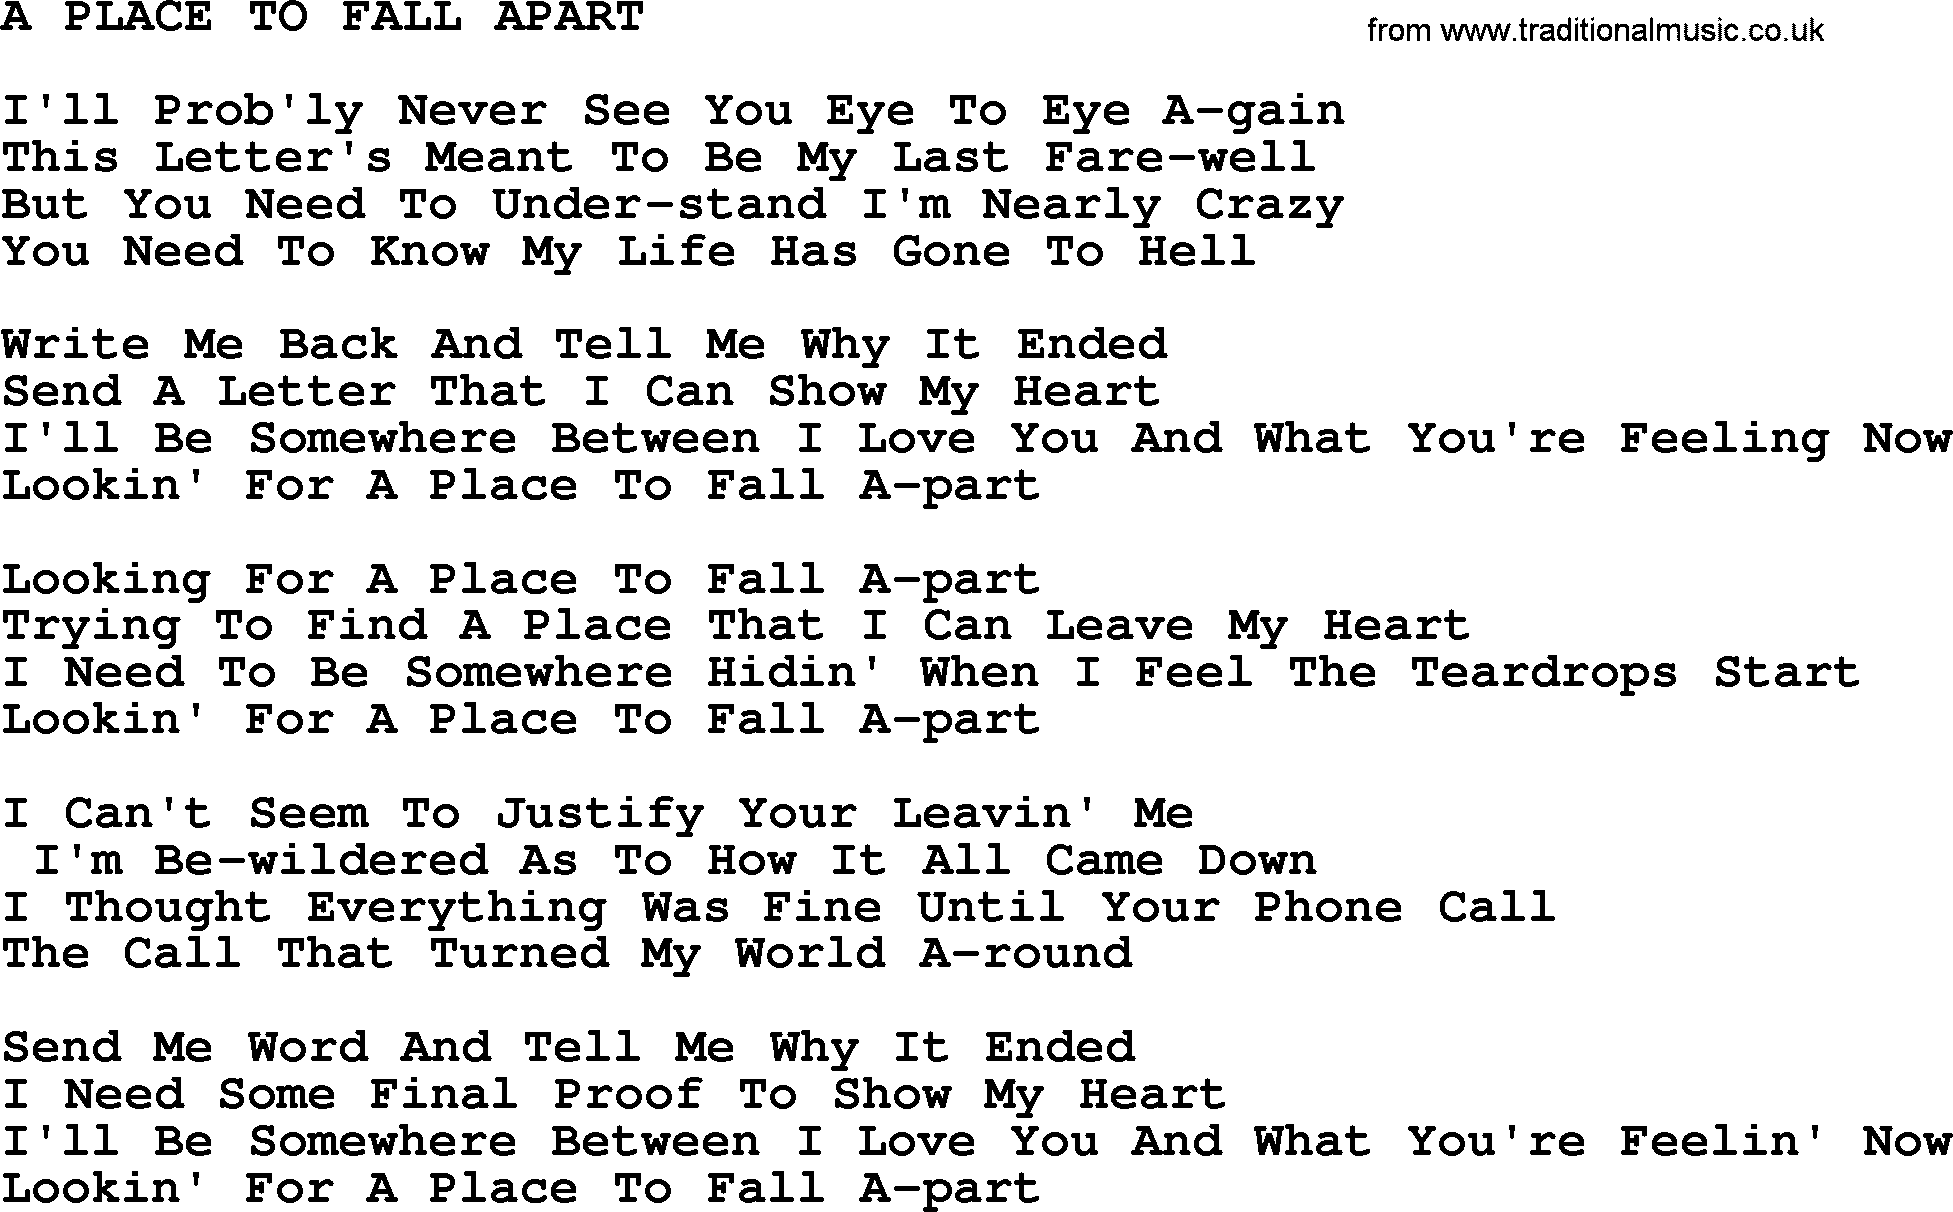 Merle Haggard song: A Place To Fall Apart, lyrics.